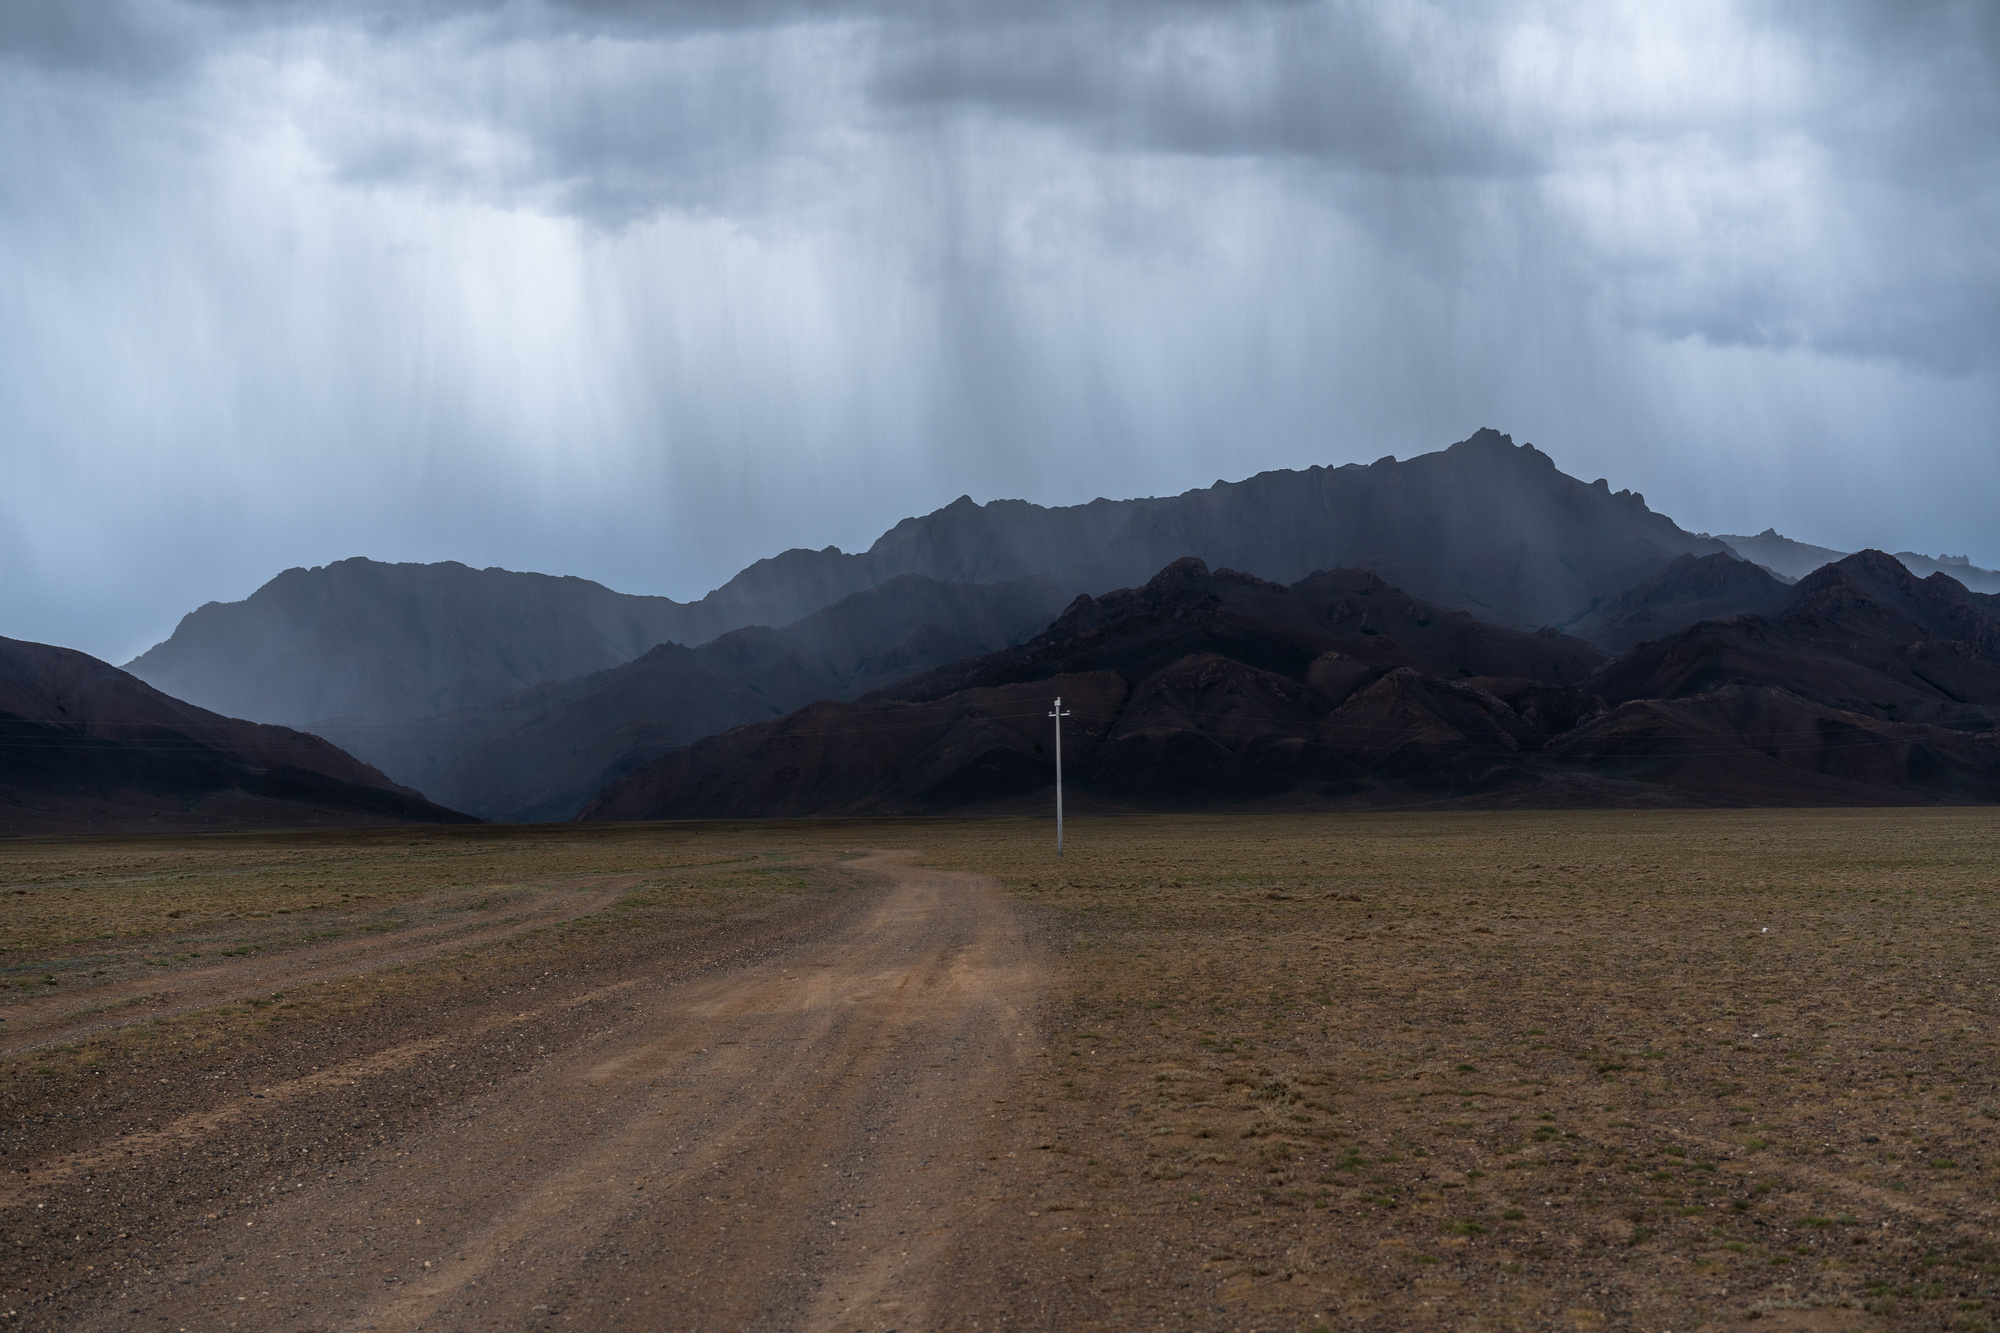 монголия, горы, дождь, ливень, тучи, дорога, mongolia, mountains, rain, clouds, road, Баландин Дмитрий